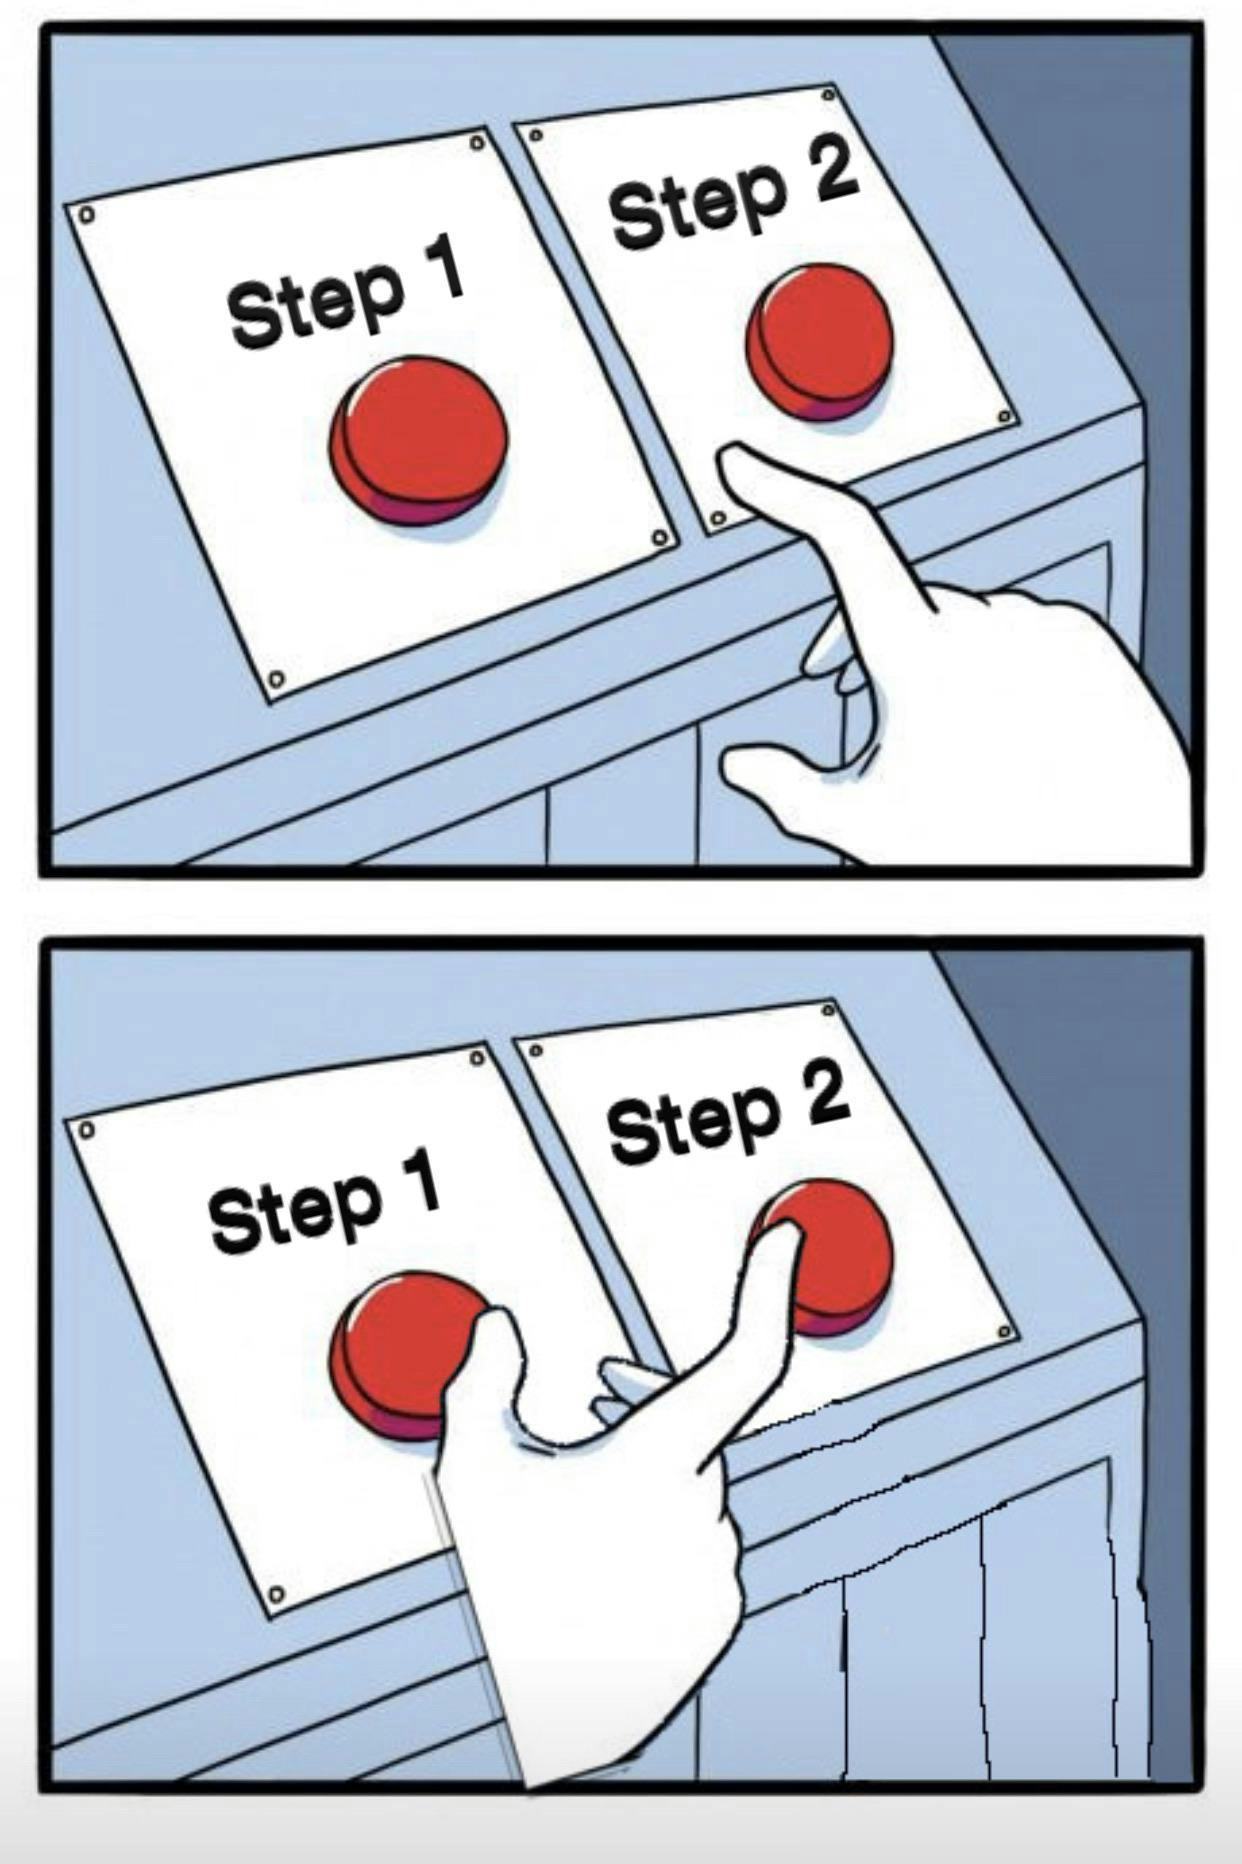 Step 1 or Step 2